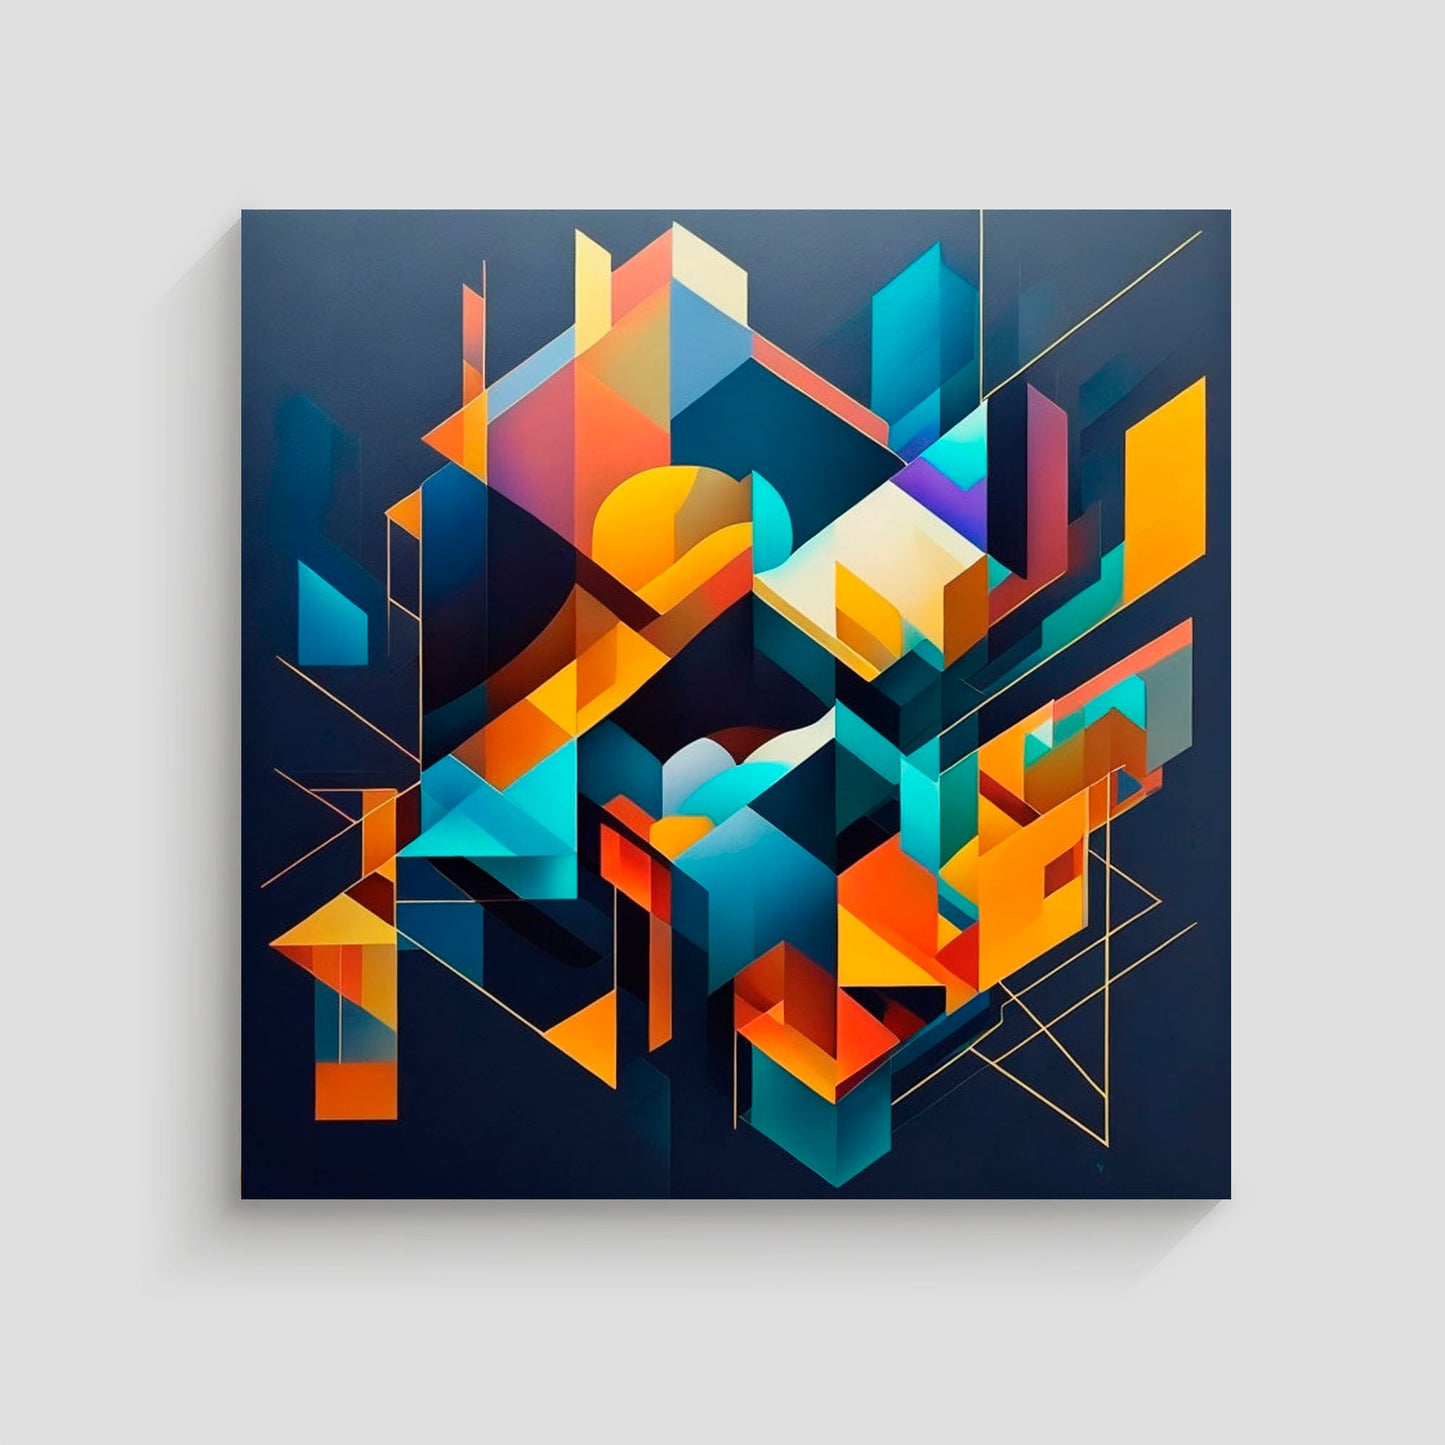 Obra de arte geométrica abstracta con formas vibrantes en azul, naranja, amarillo y púrpura sobre un fondo azul oscuro.